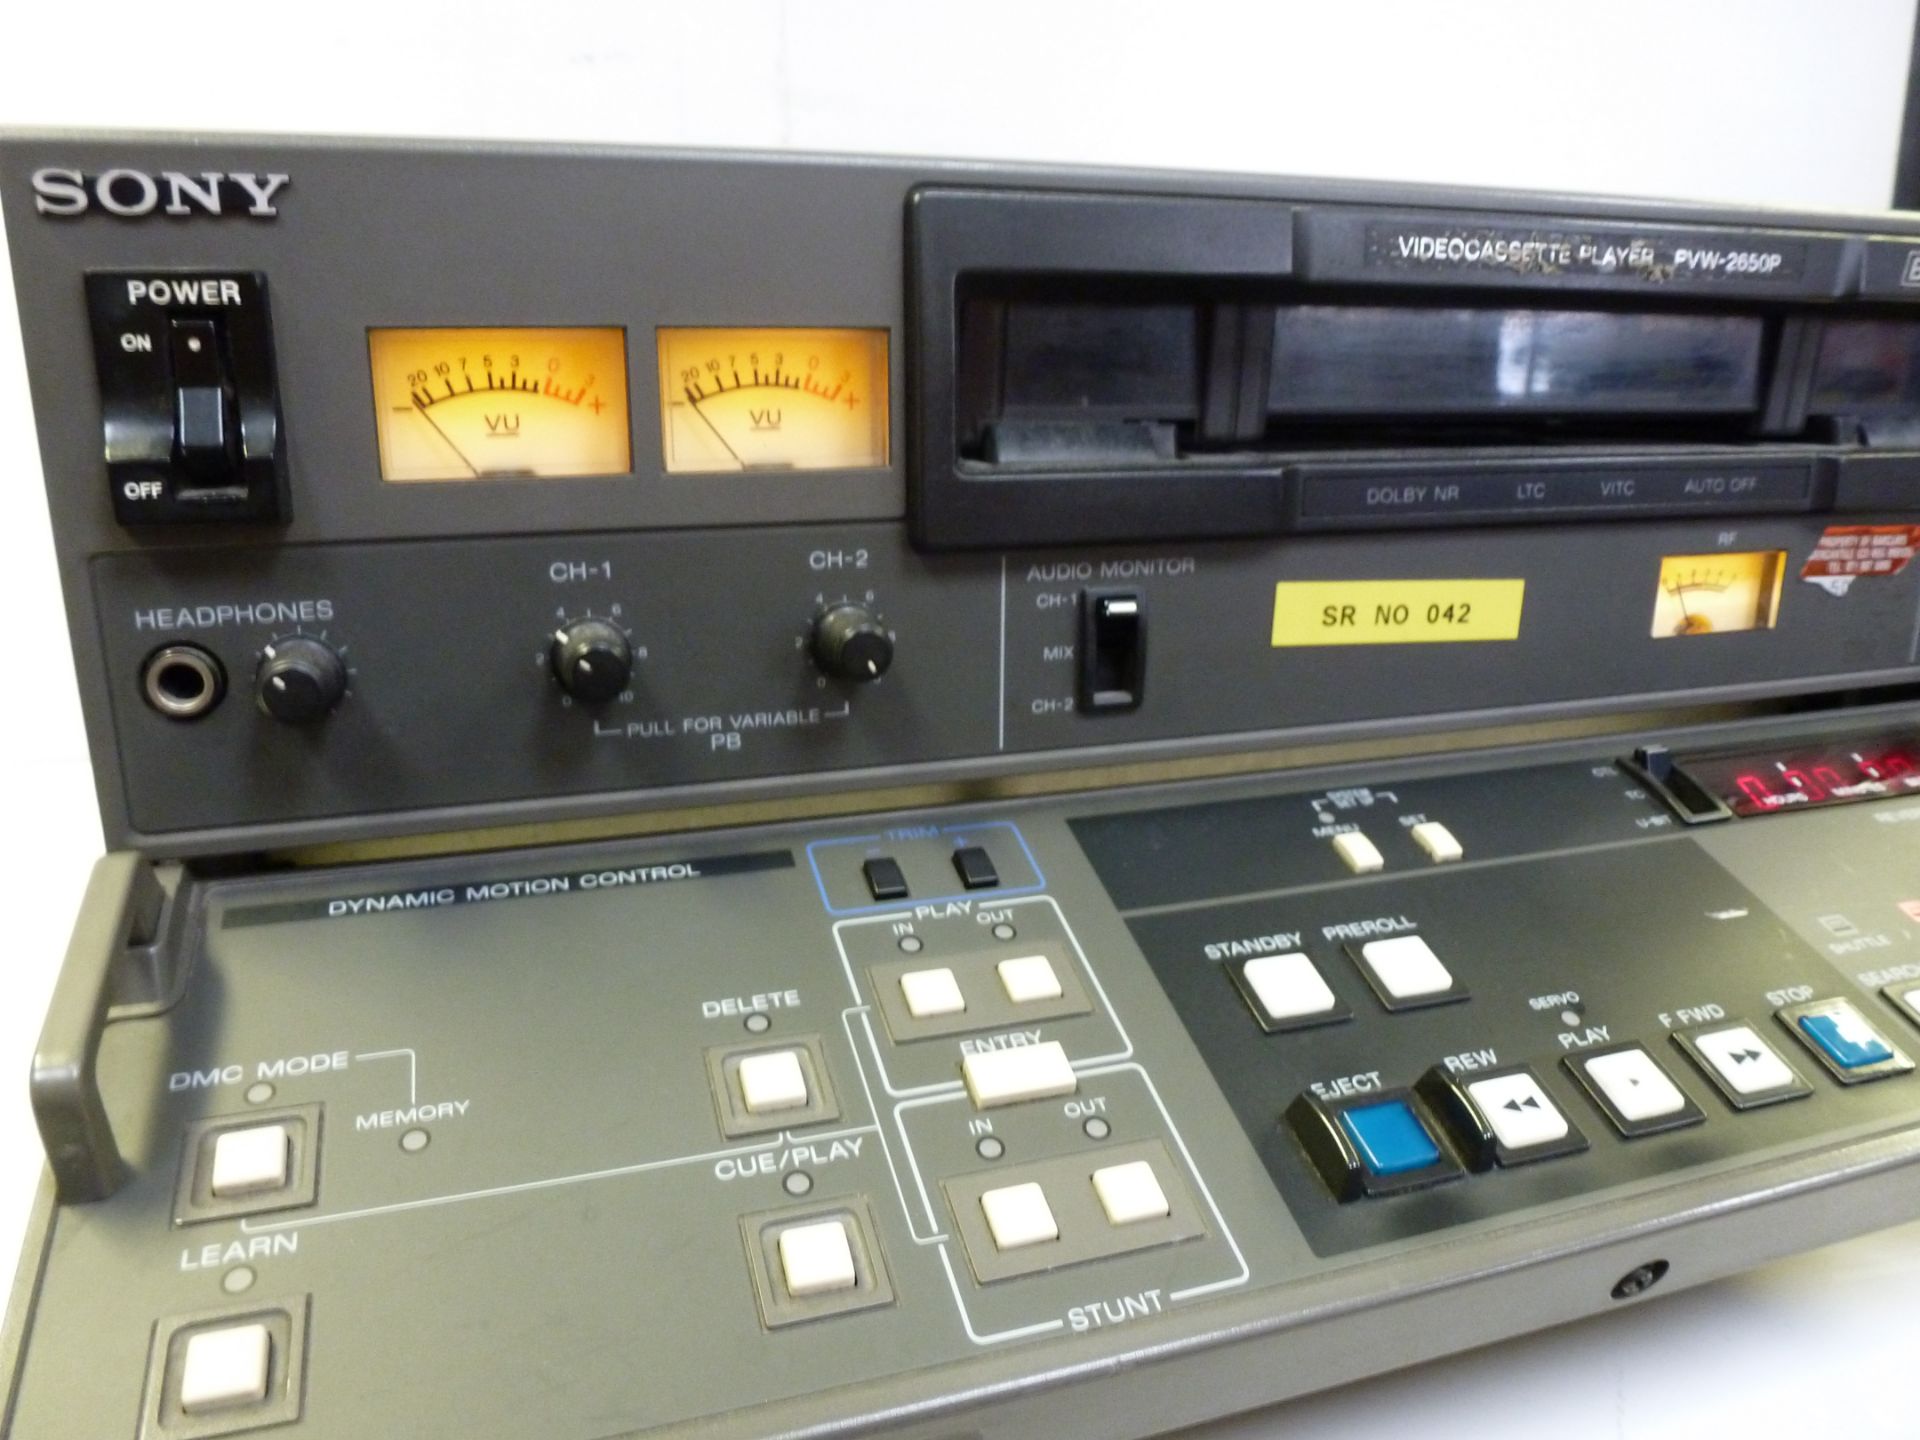 Sony PVW 2650P Betacam SP Video Cassette Recorder, S/N 15007 - Image 3 of 7